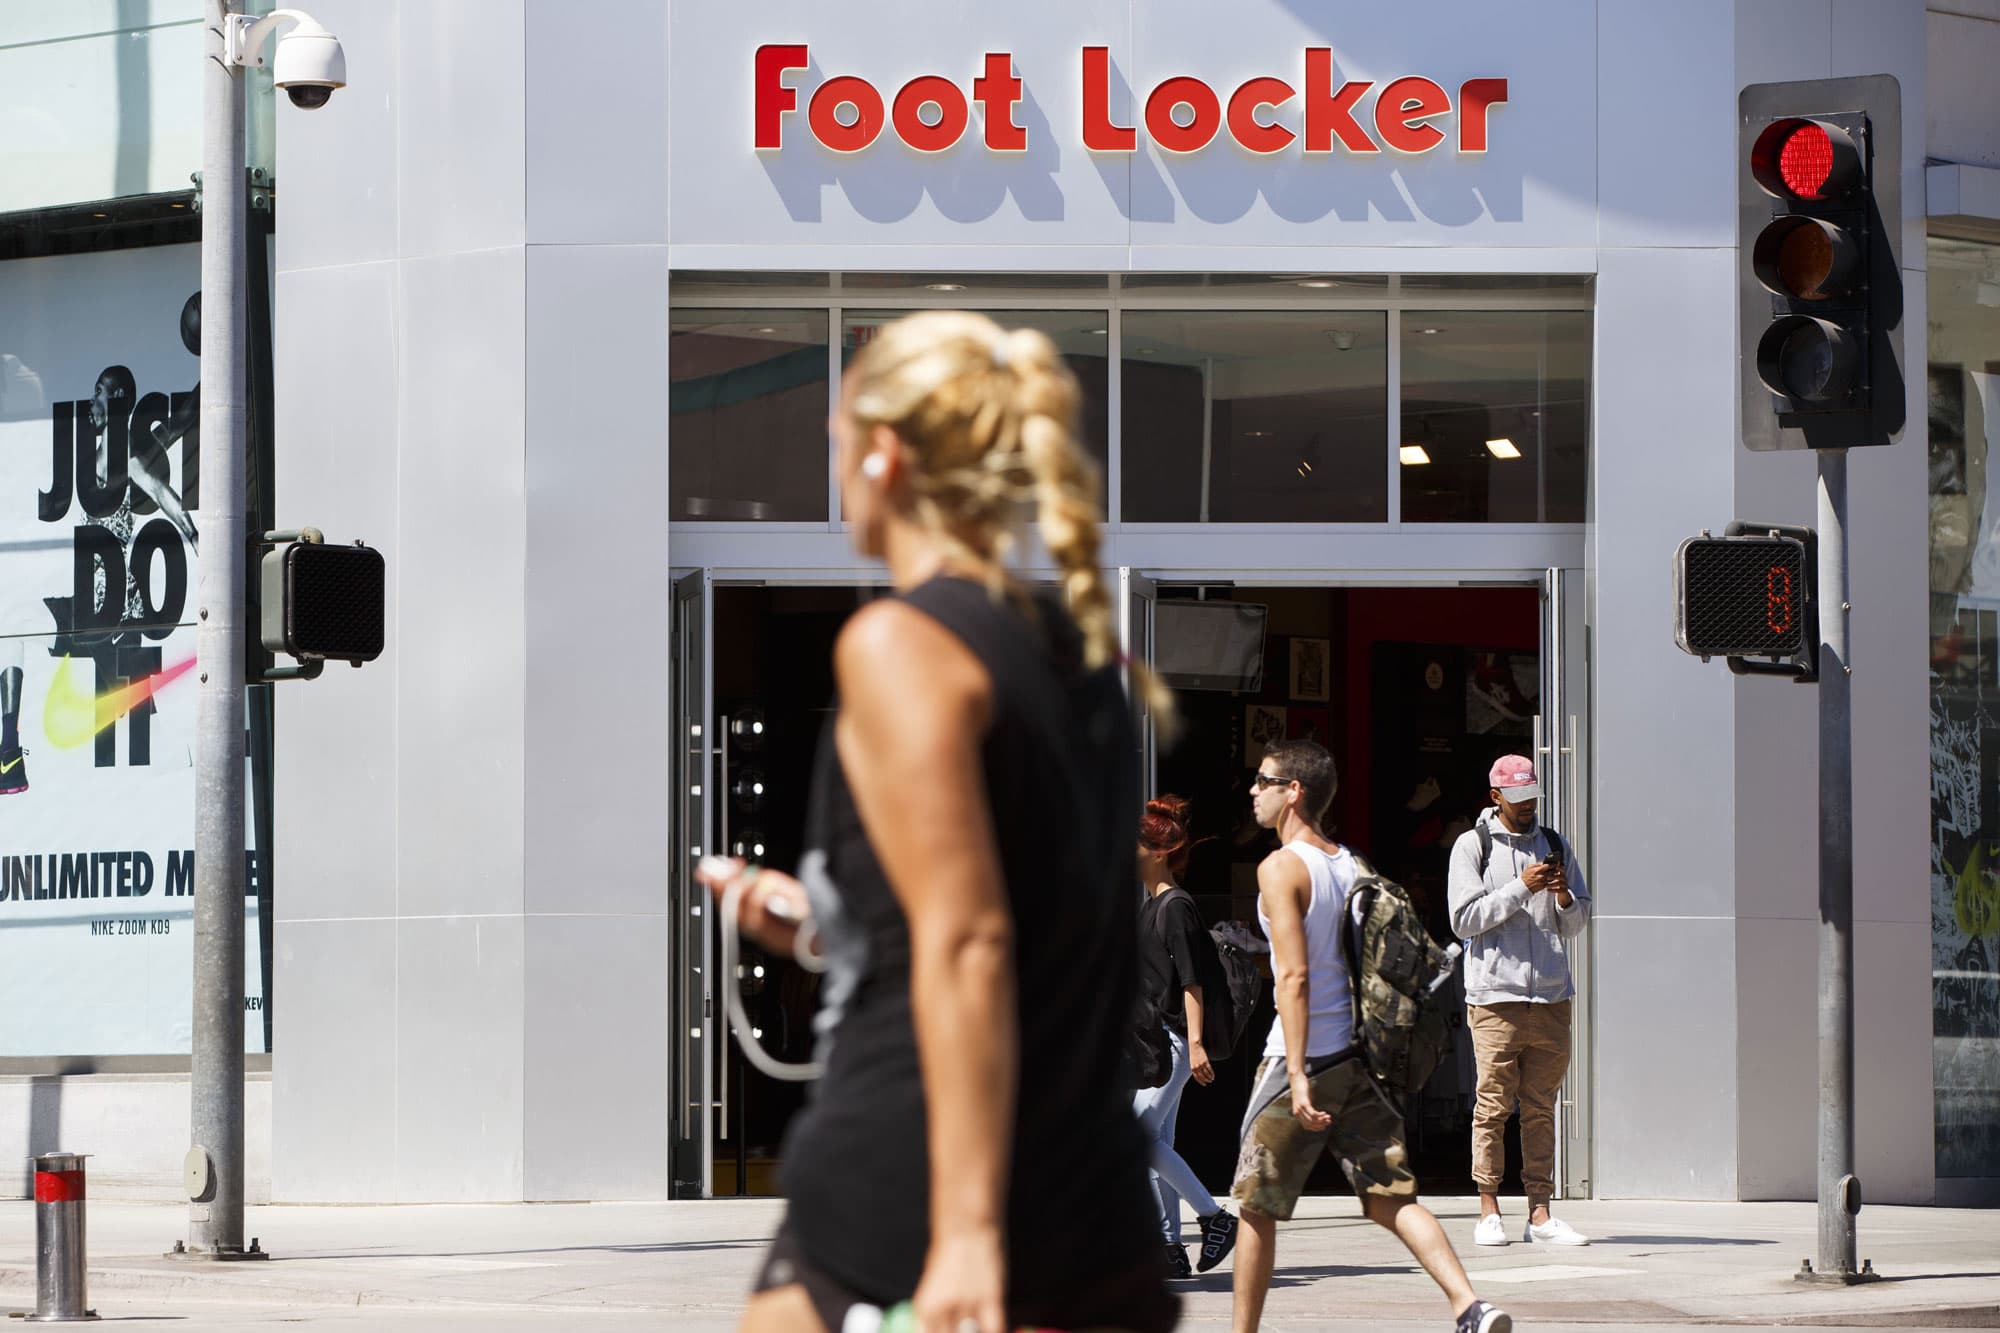 Foot Locker's new leadership could bring big returns for retailers, says Citi